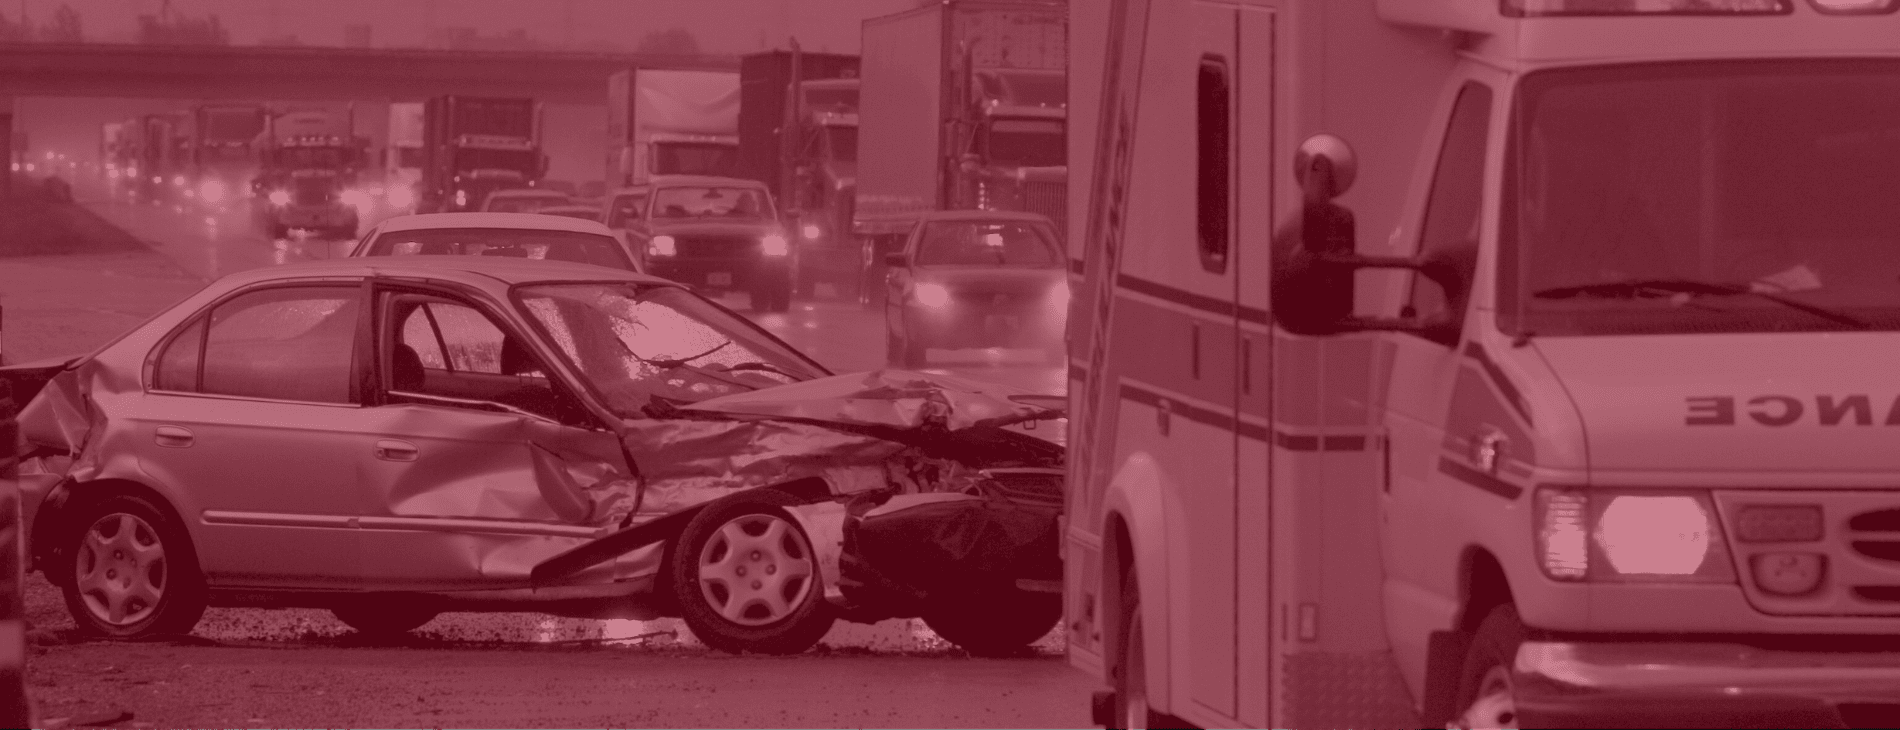 Hayward Car Crash